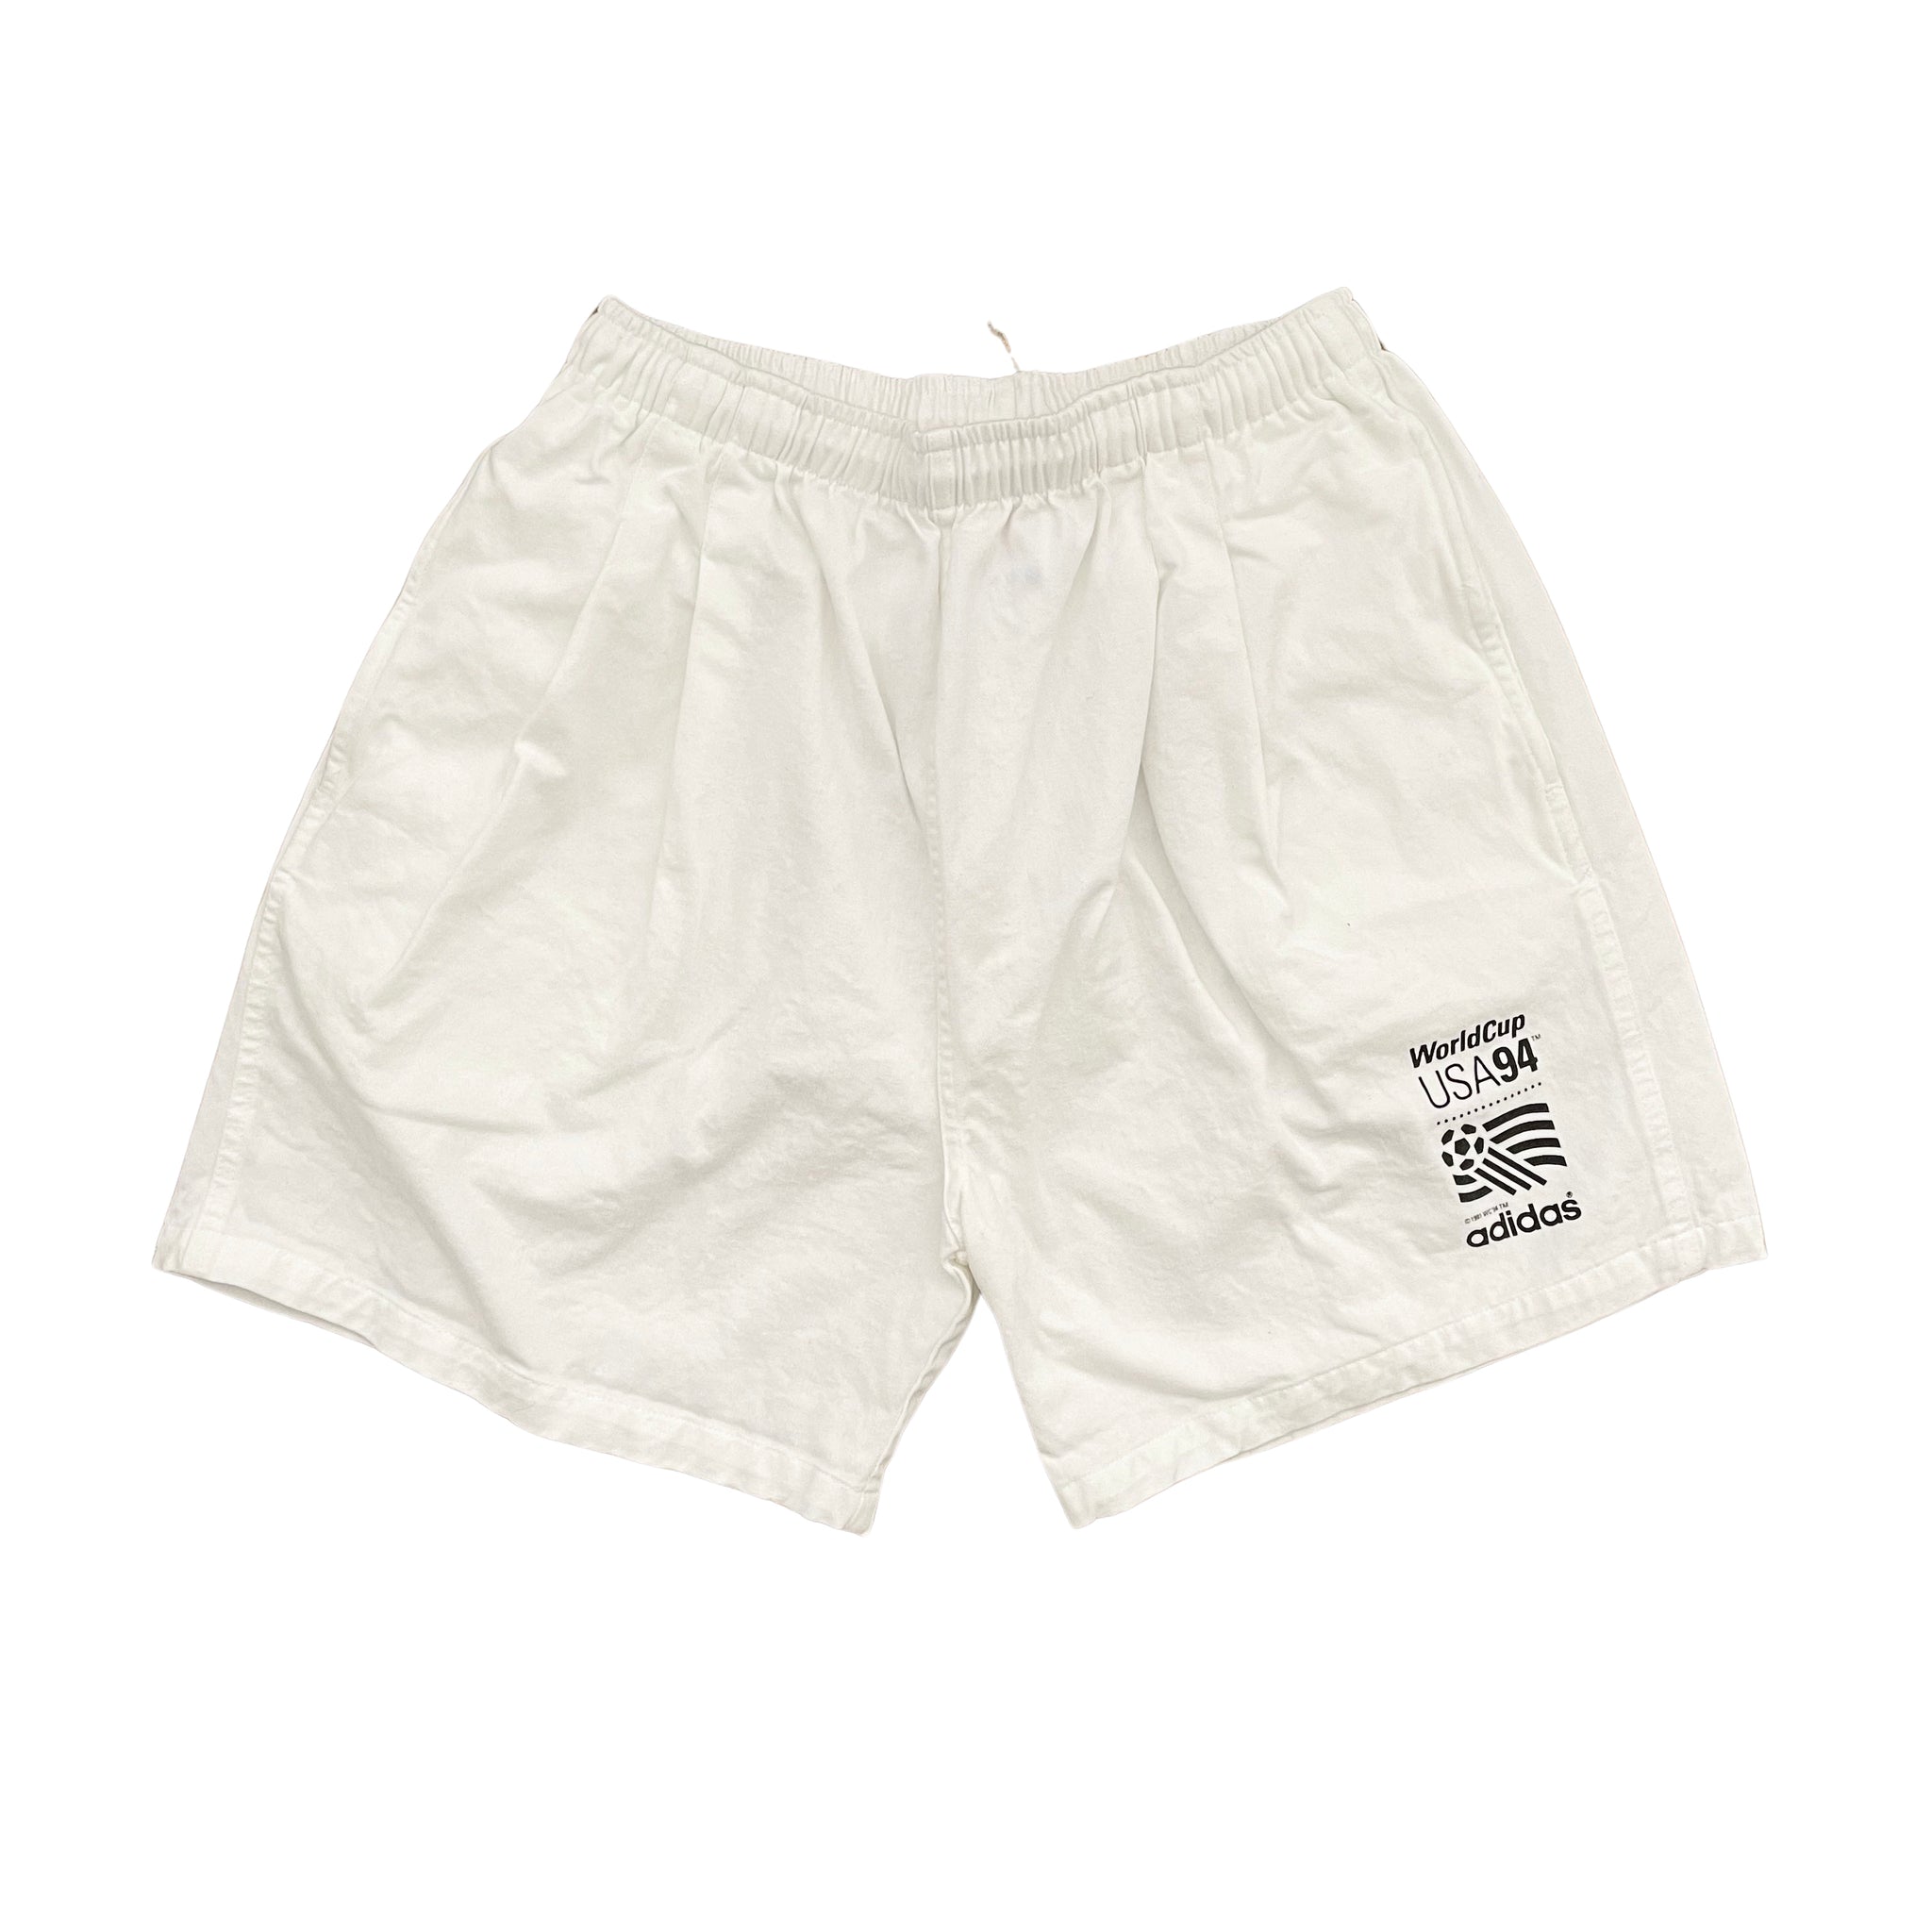 Adidas WC 1994 Cotton Shorts - L/XL